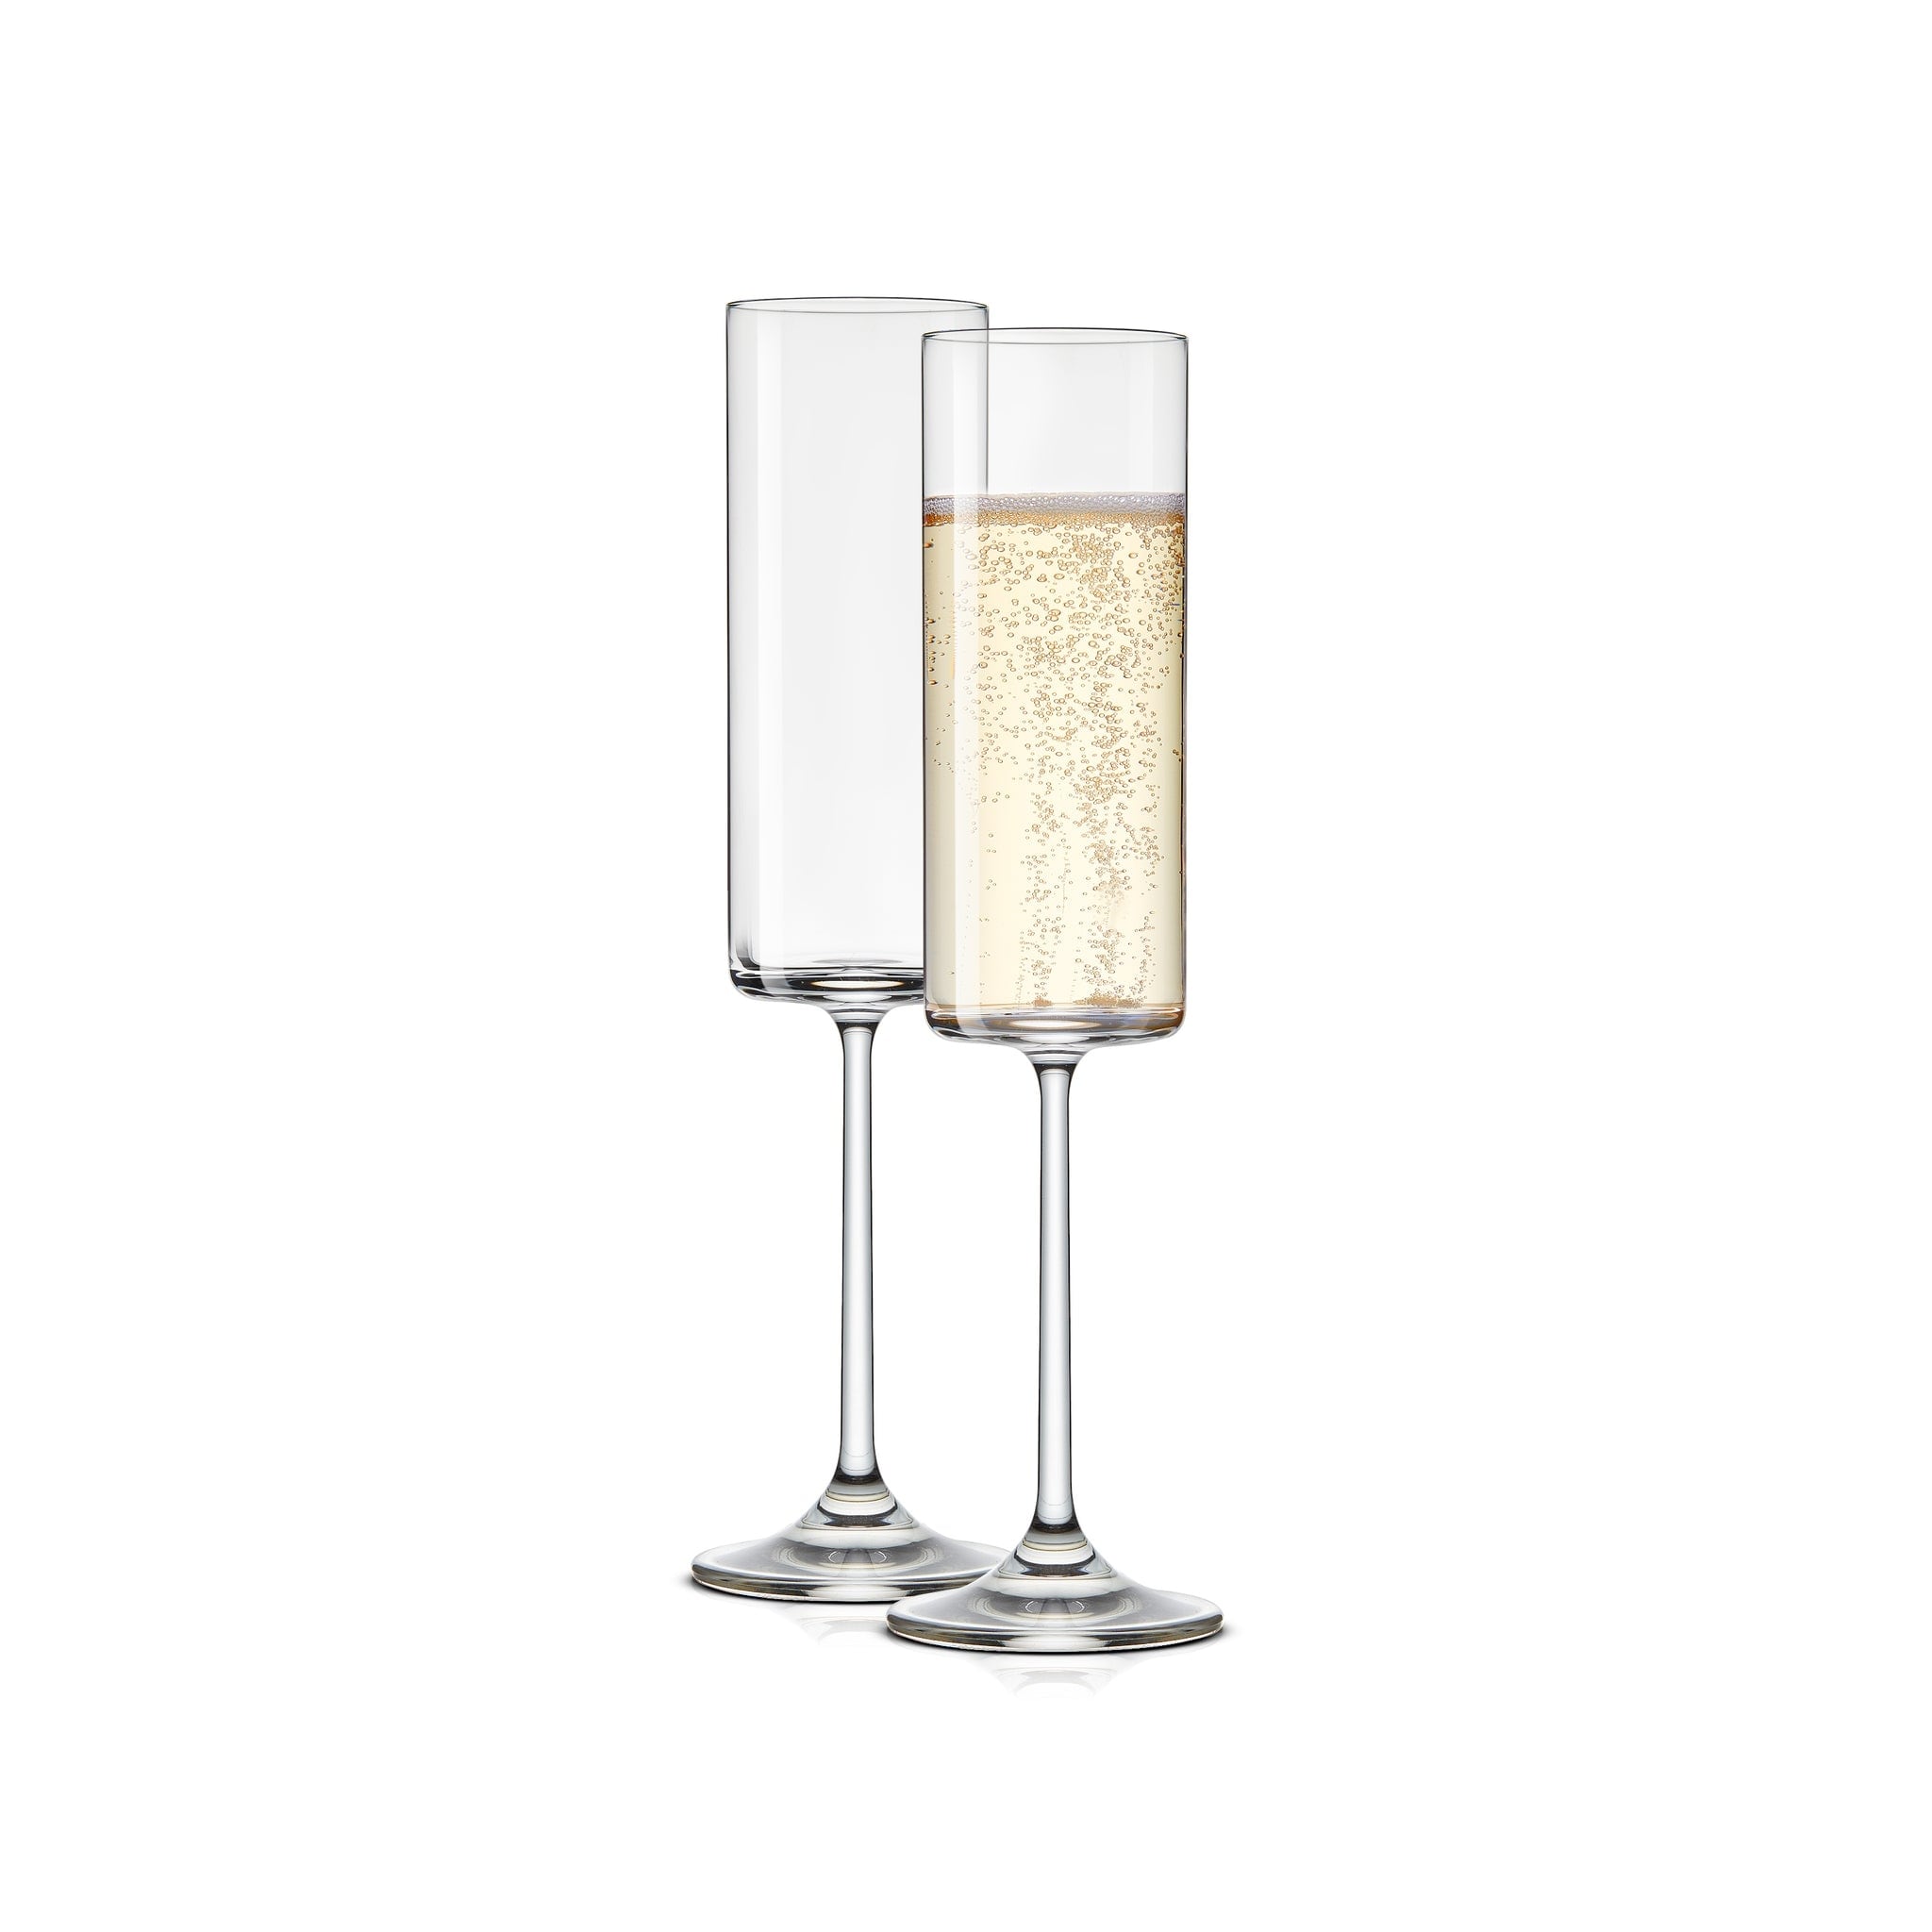 https://ak1.ostkcdn.com/images/products/is/images/direct/ad4e963336b6a6a51dde03ebb9287405b3c64c5a/JoyJolt-Claire-European-Crystal-Champagne-Glasses-5.7-oz-Set-of-2.jpg